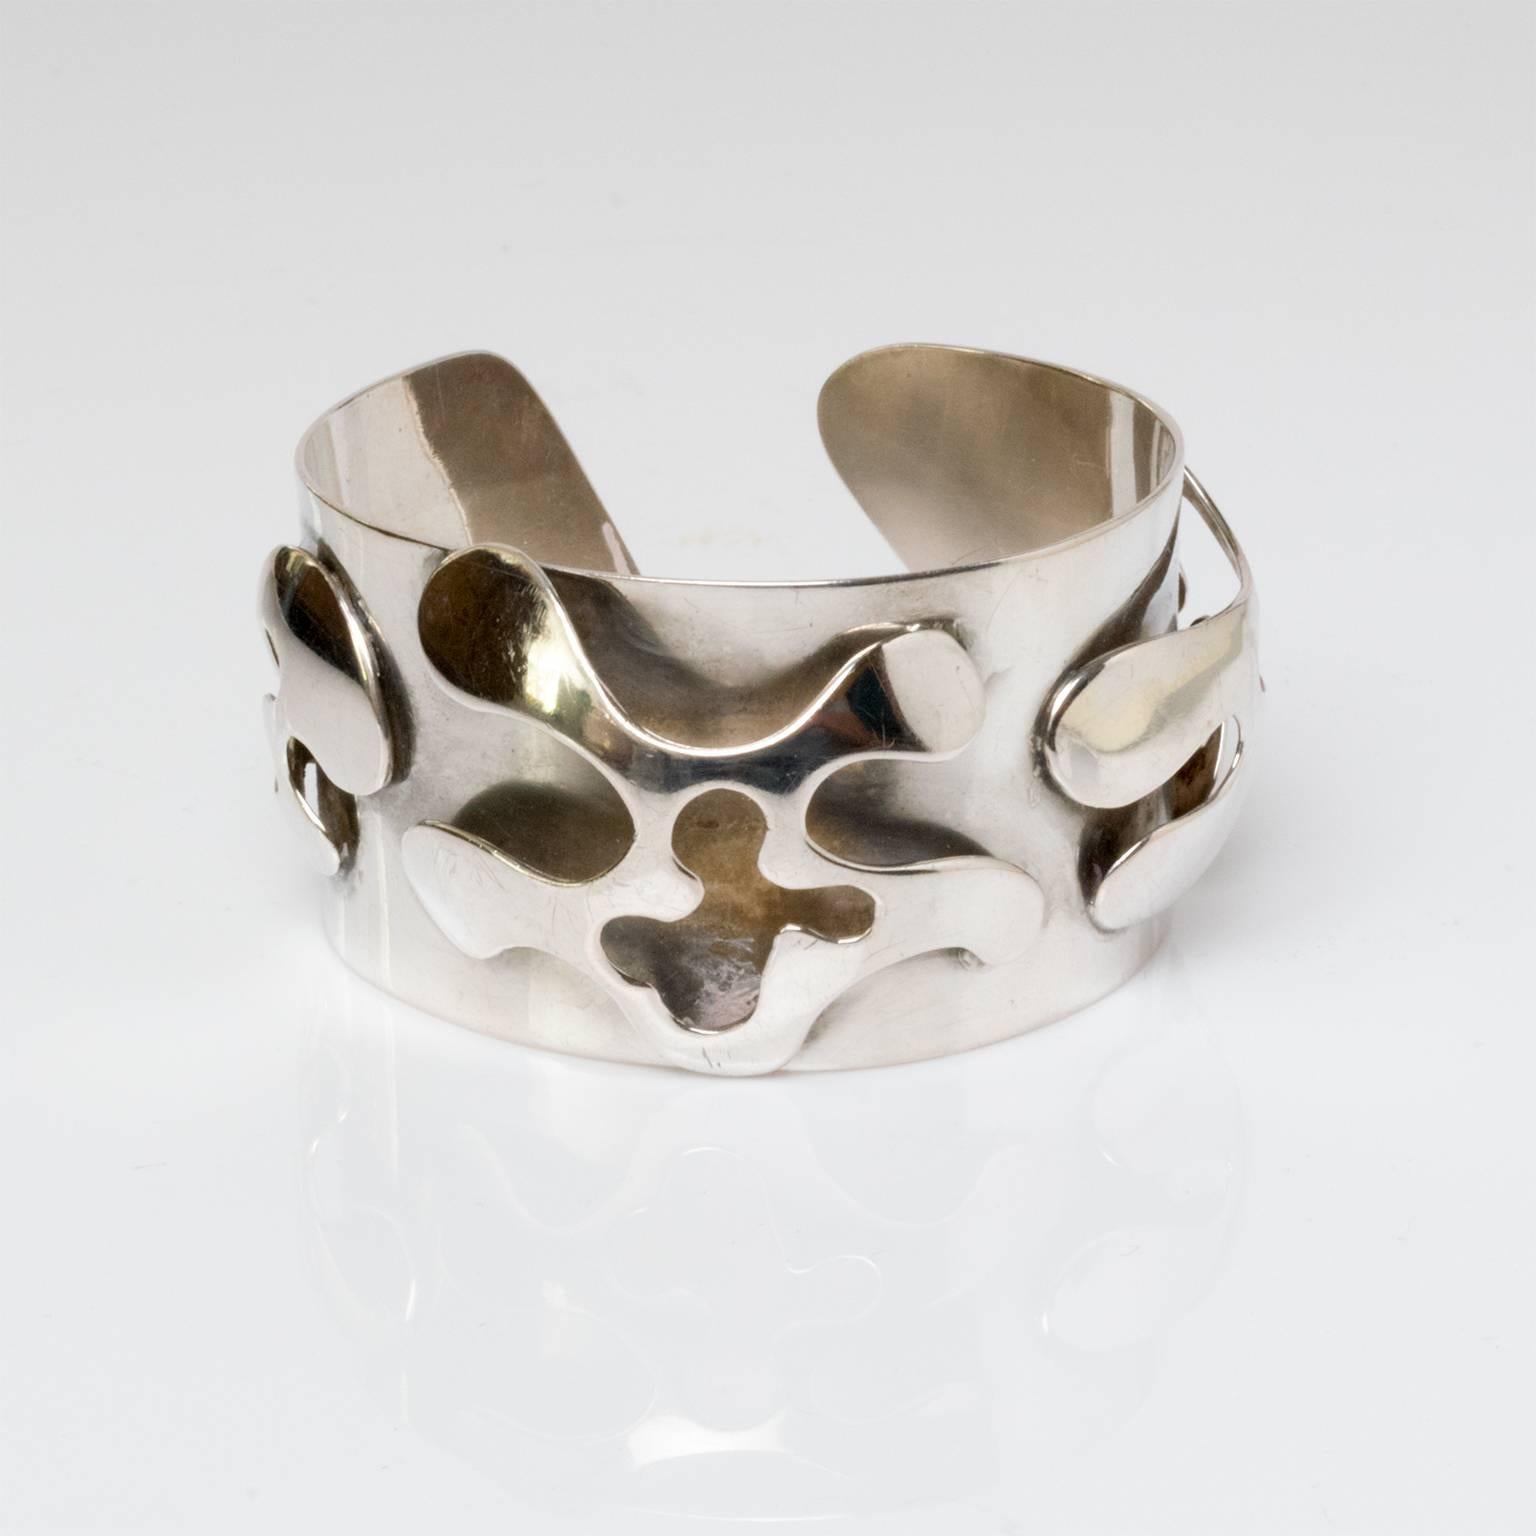 A silver bracelet with a raised cutout surface in organic shapes. Designed Henry Marius Jacobsen, Copenhagen, 1960, Denmark
Diameter: 2.5